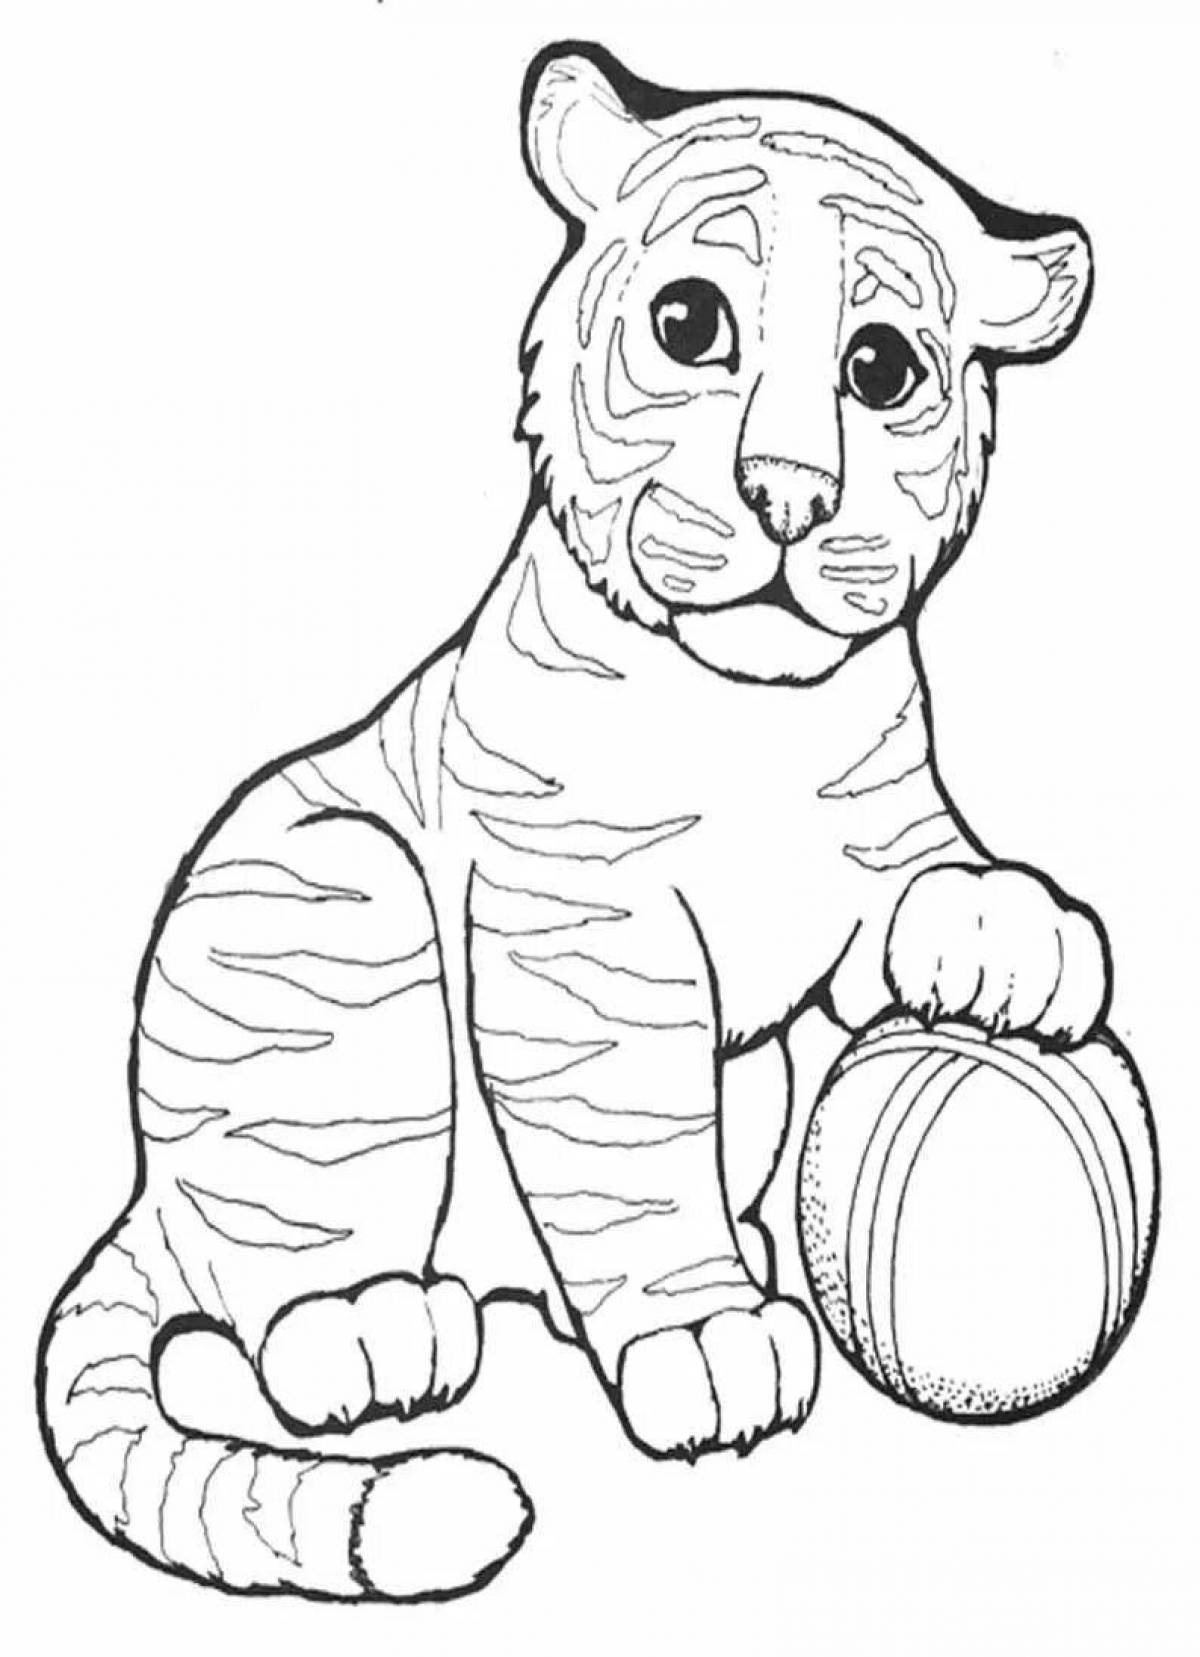 Live tigress with cub coloring book